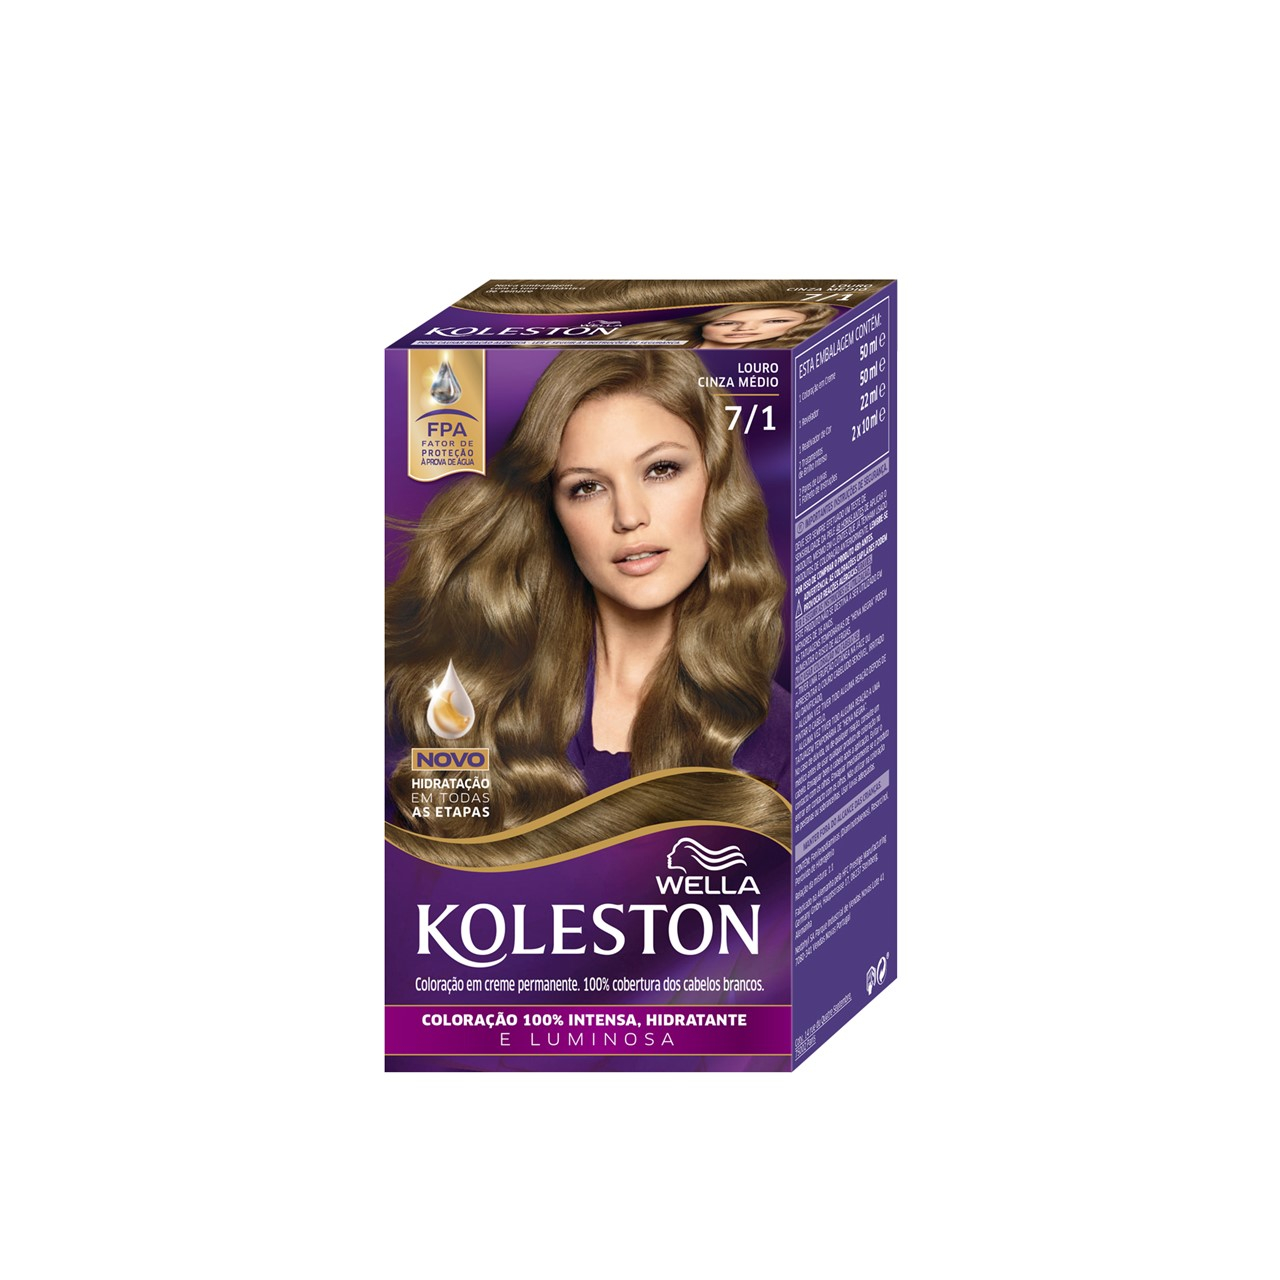 Wella Koleston 7/1 Medium Ash Blonde Permanent Hair Color